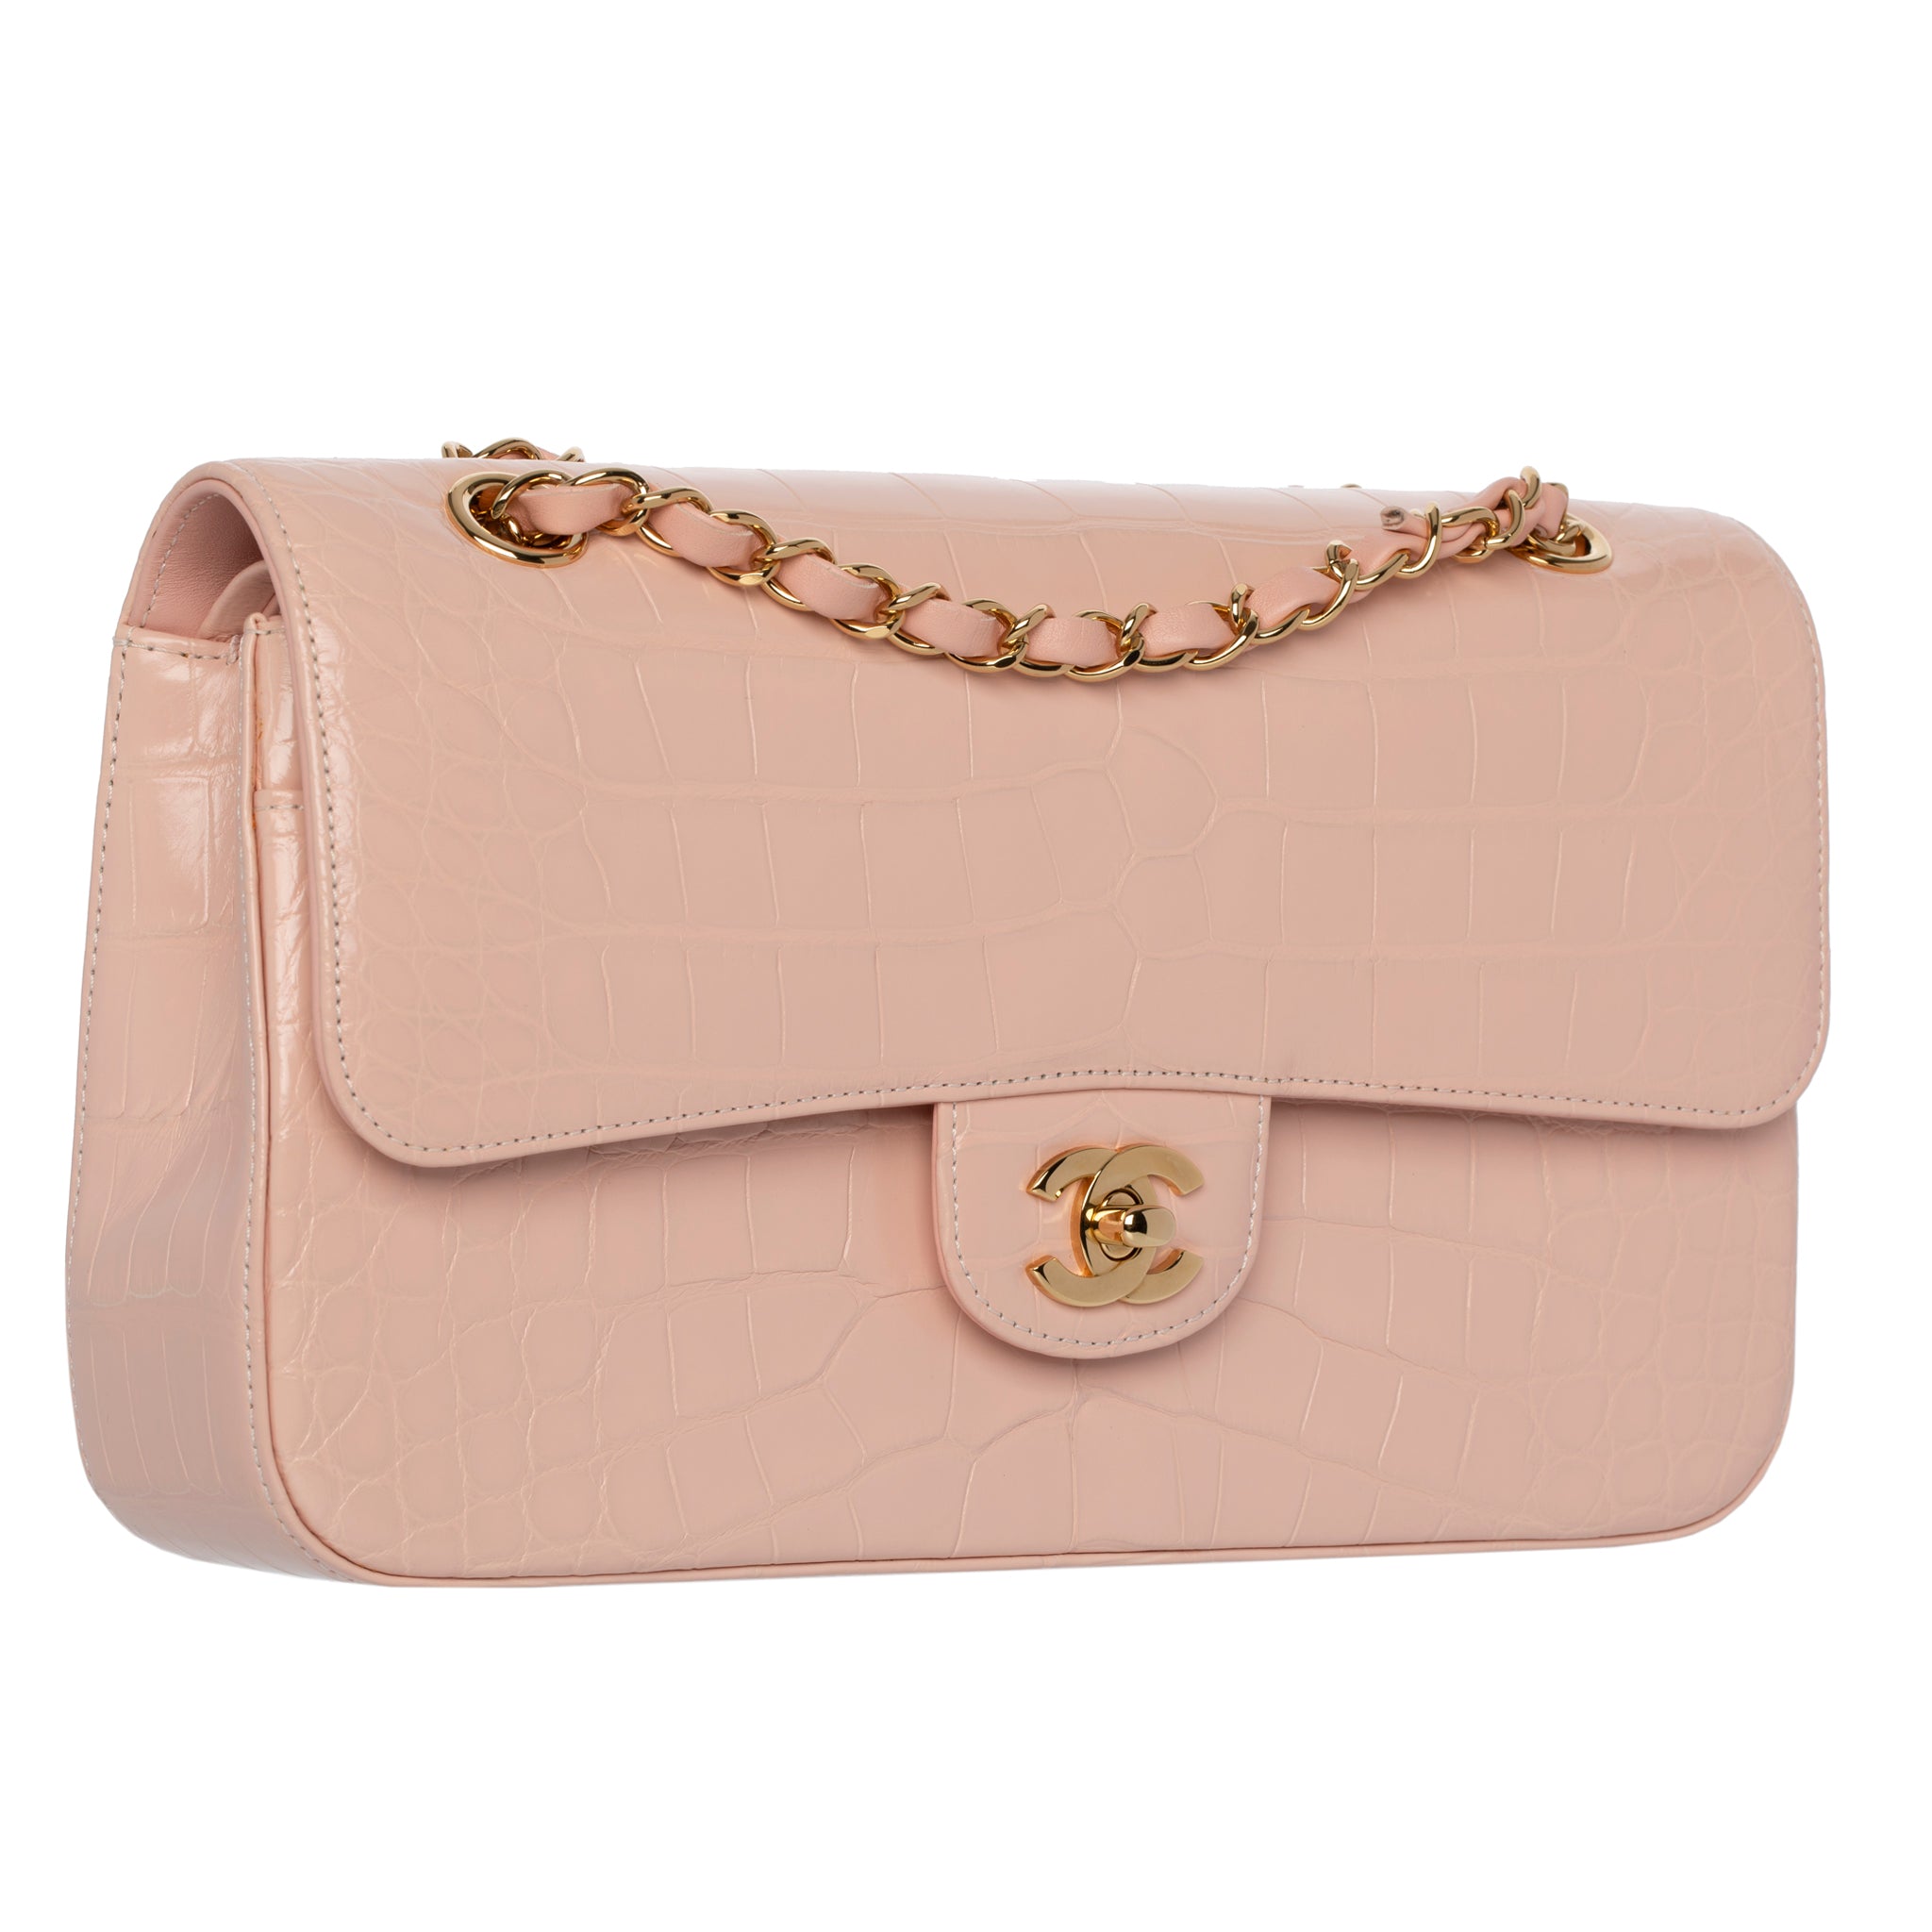 Chanel Medium Double Classic Flap Bag Pale Pink Crocodile Leather Gold Tone Hardware